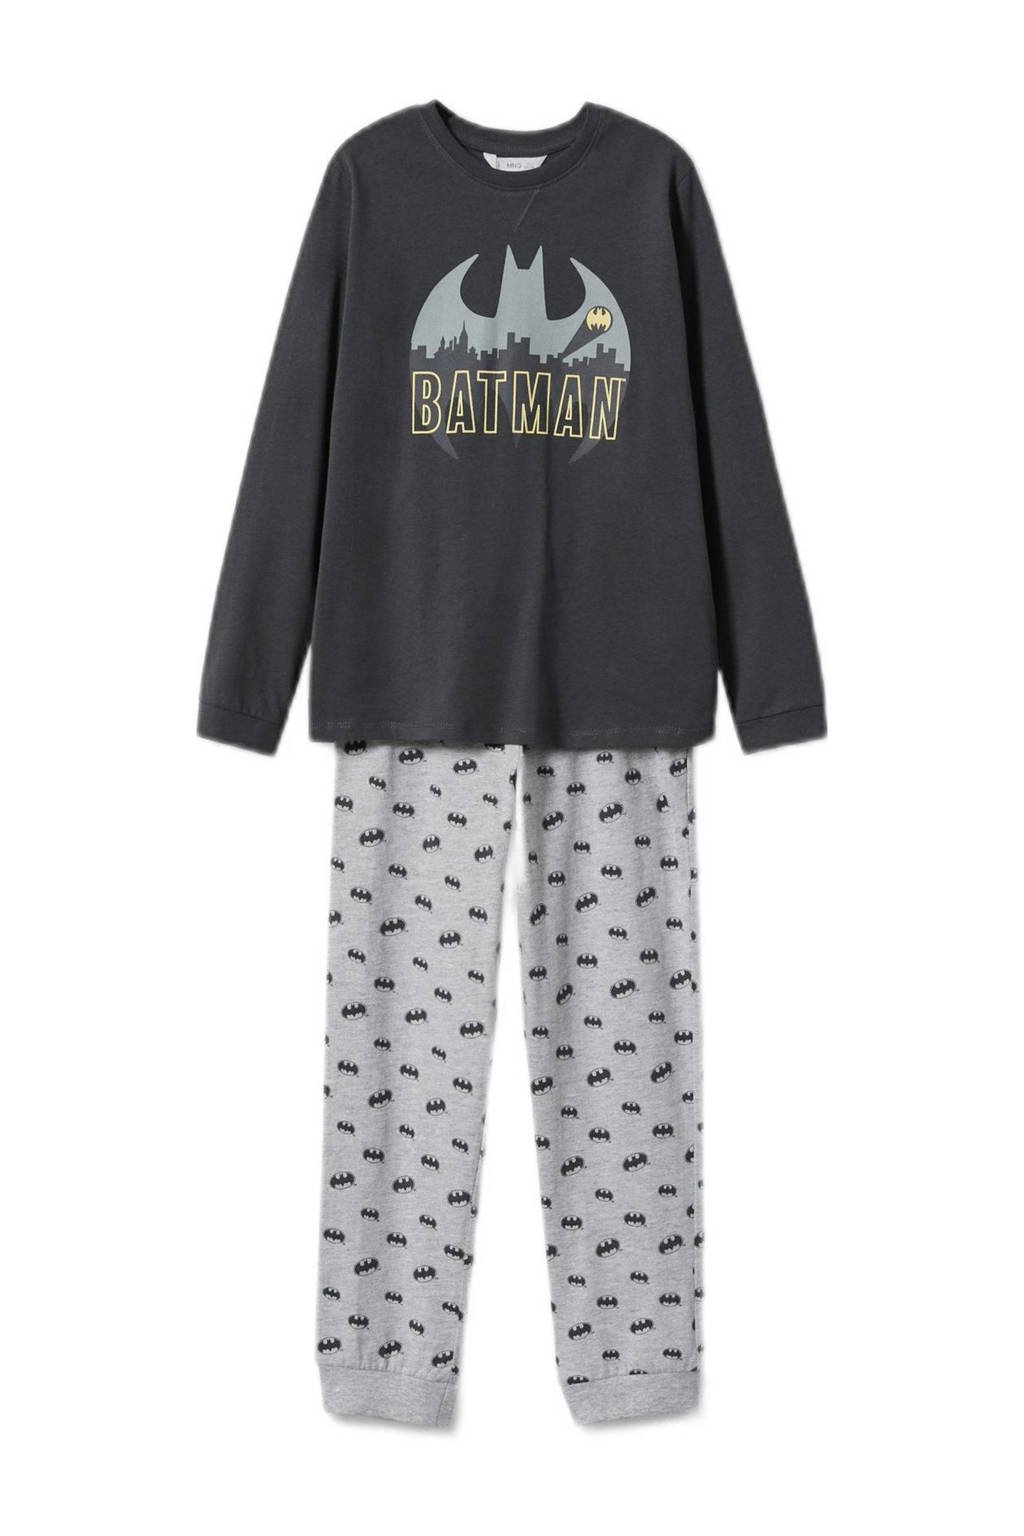 Mango Kids   Batman pyjama met printopdruk grijs/lichtgrijs